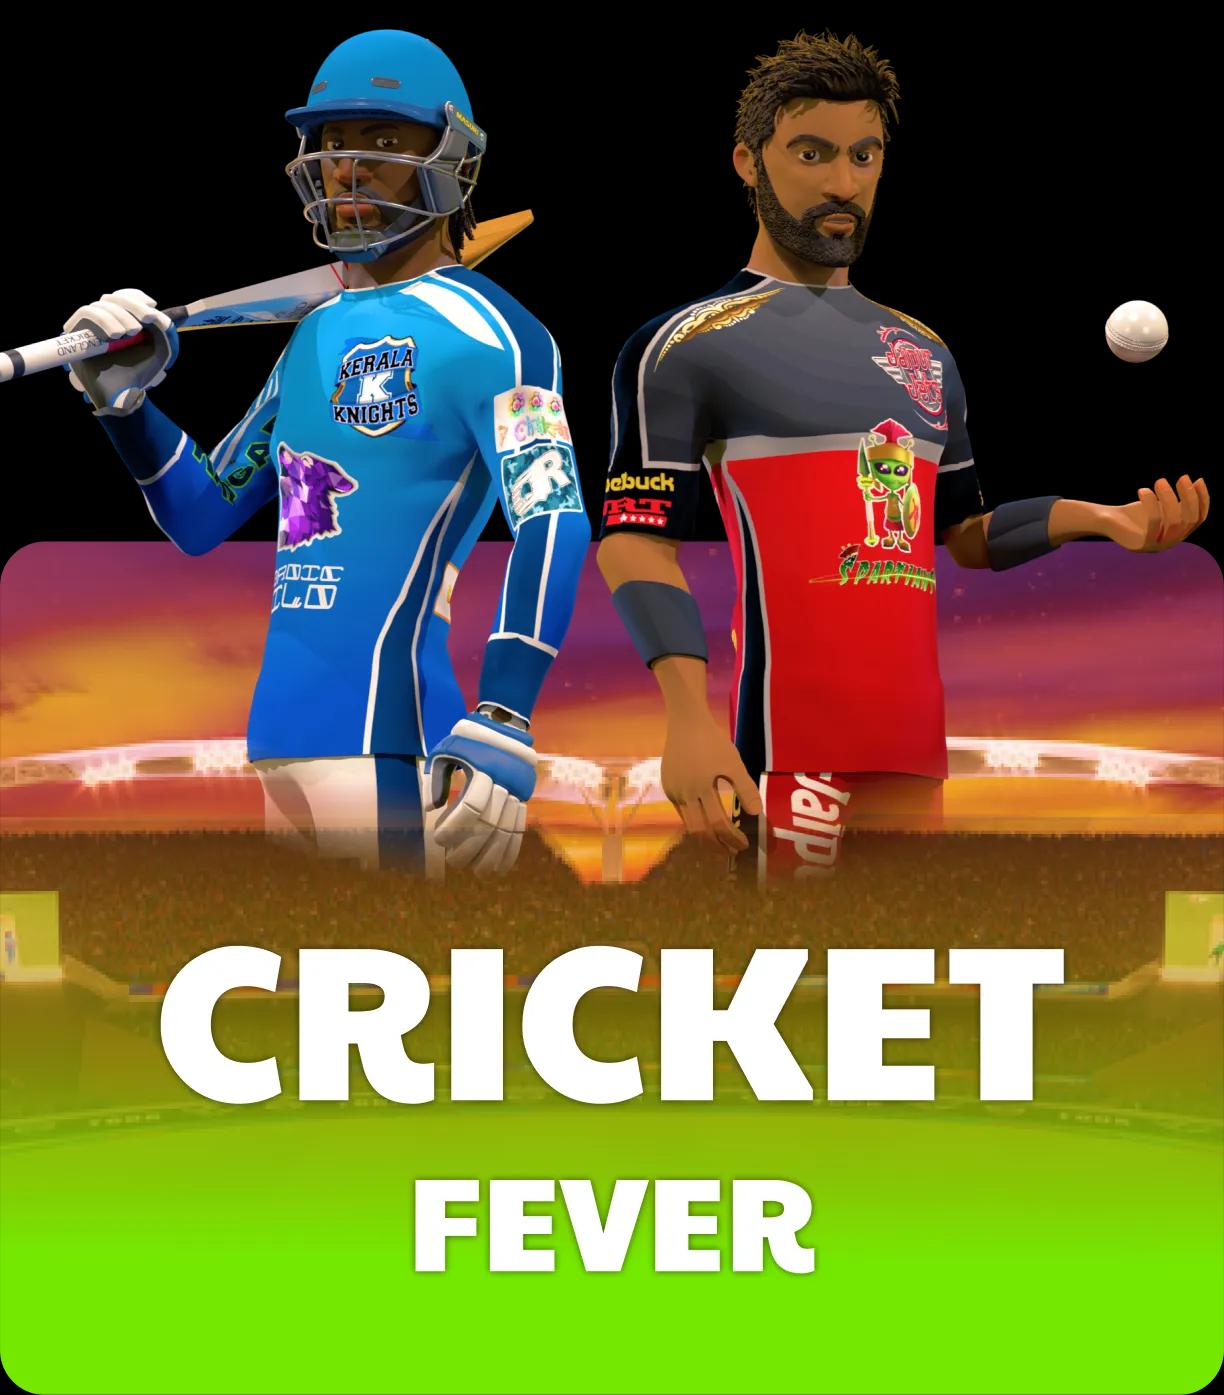 Cricket Fever Video Slot